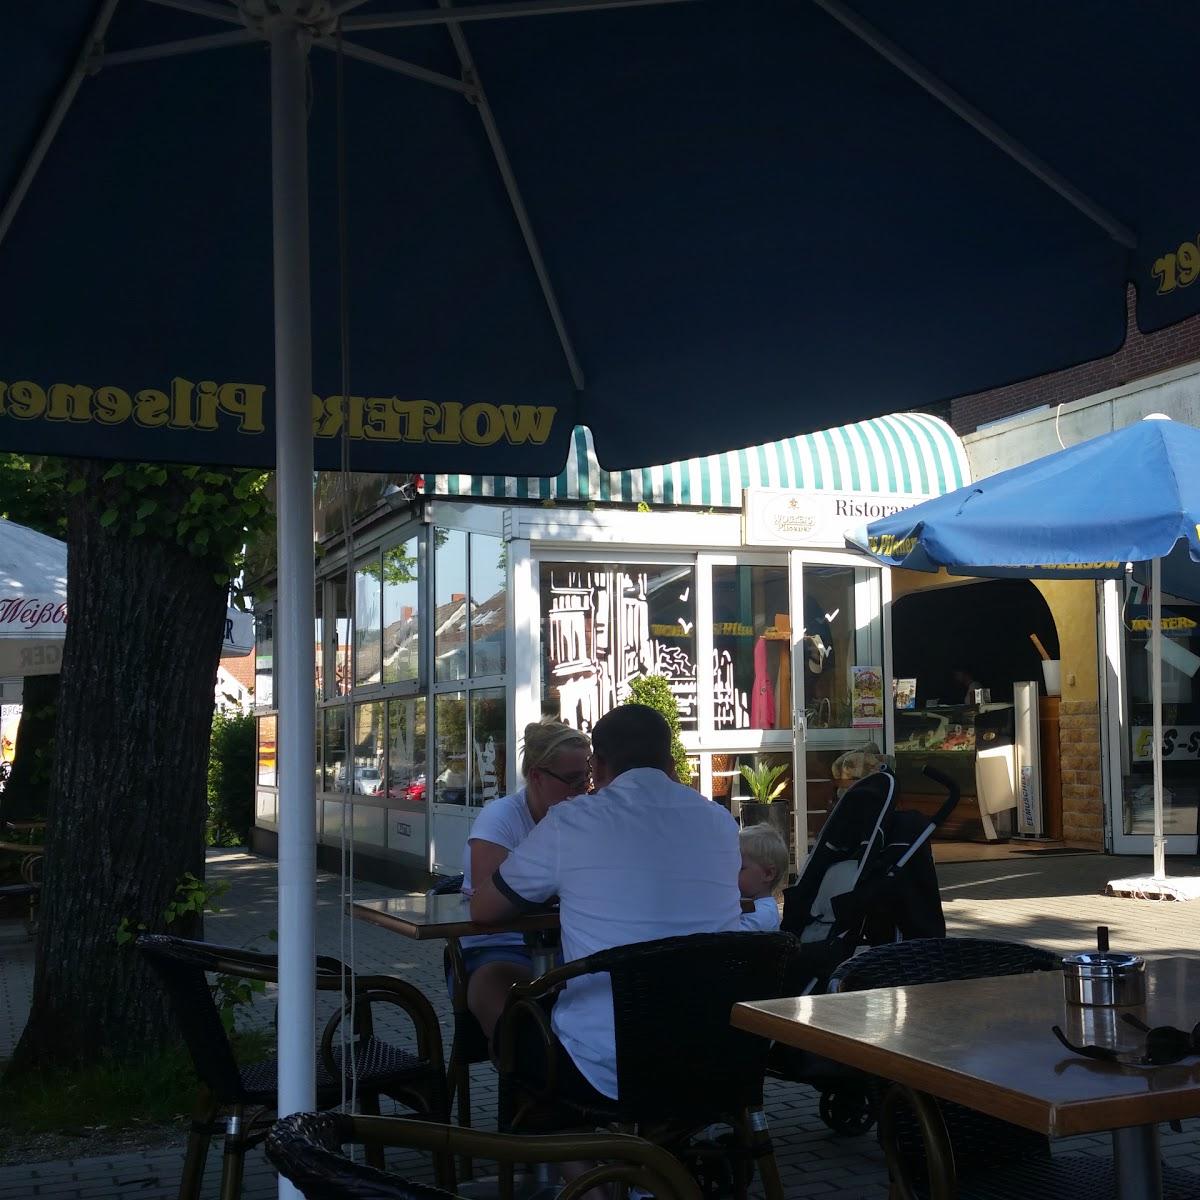 Restaurant "Ristorante Pizzeria Eiscafé bei Toni" in  Vechelde